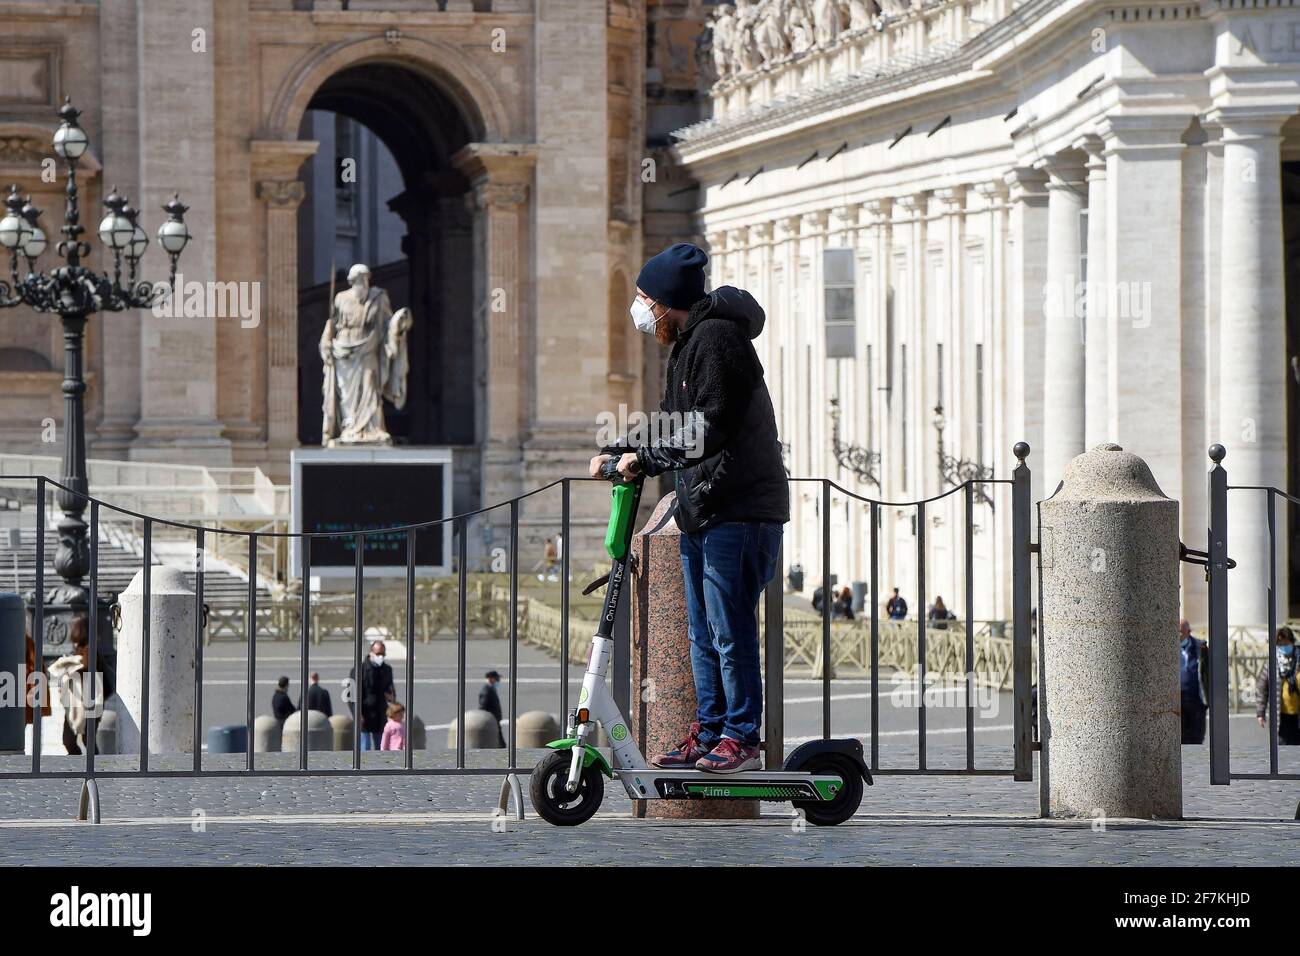 Italy, Rome, March 13, 2021 : People riding an electric scooter in Saint Peter Square   Photo © Fabio Mazzarella/Sintesi/Alamy Stock Photo Stock Photo